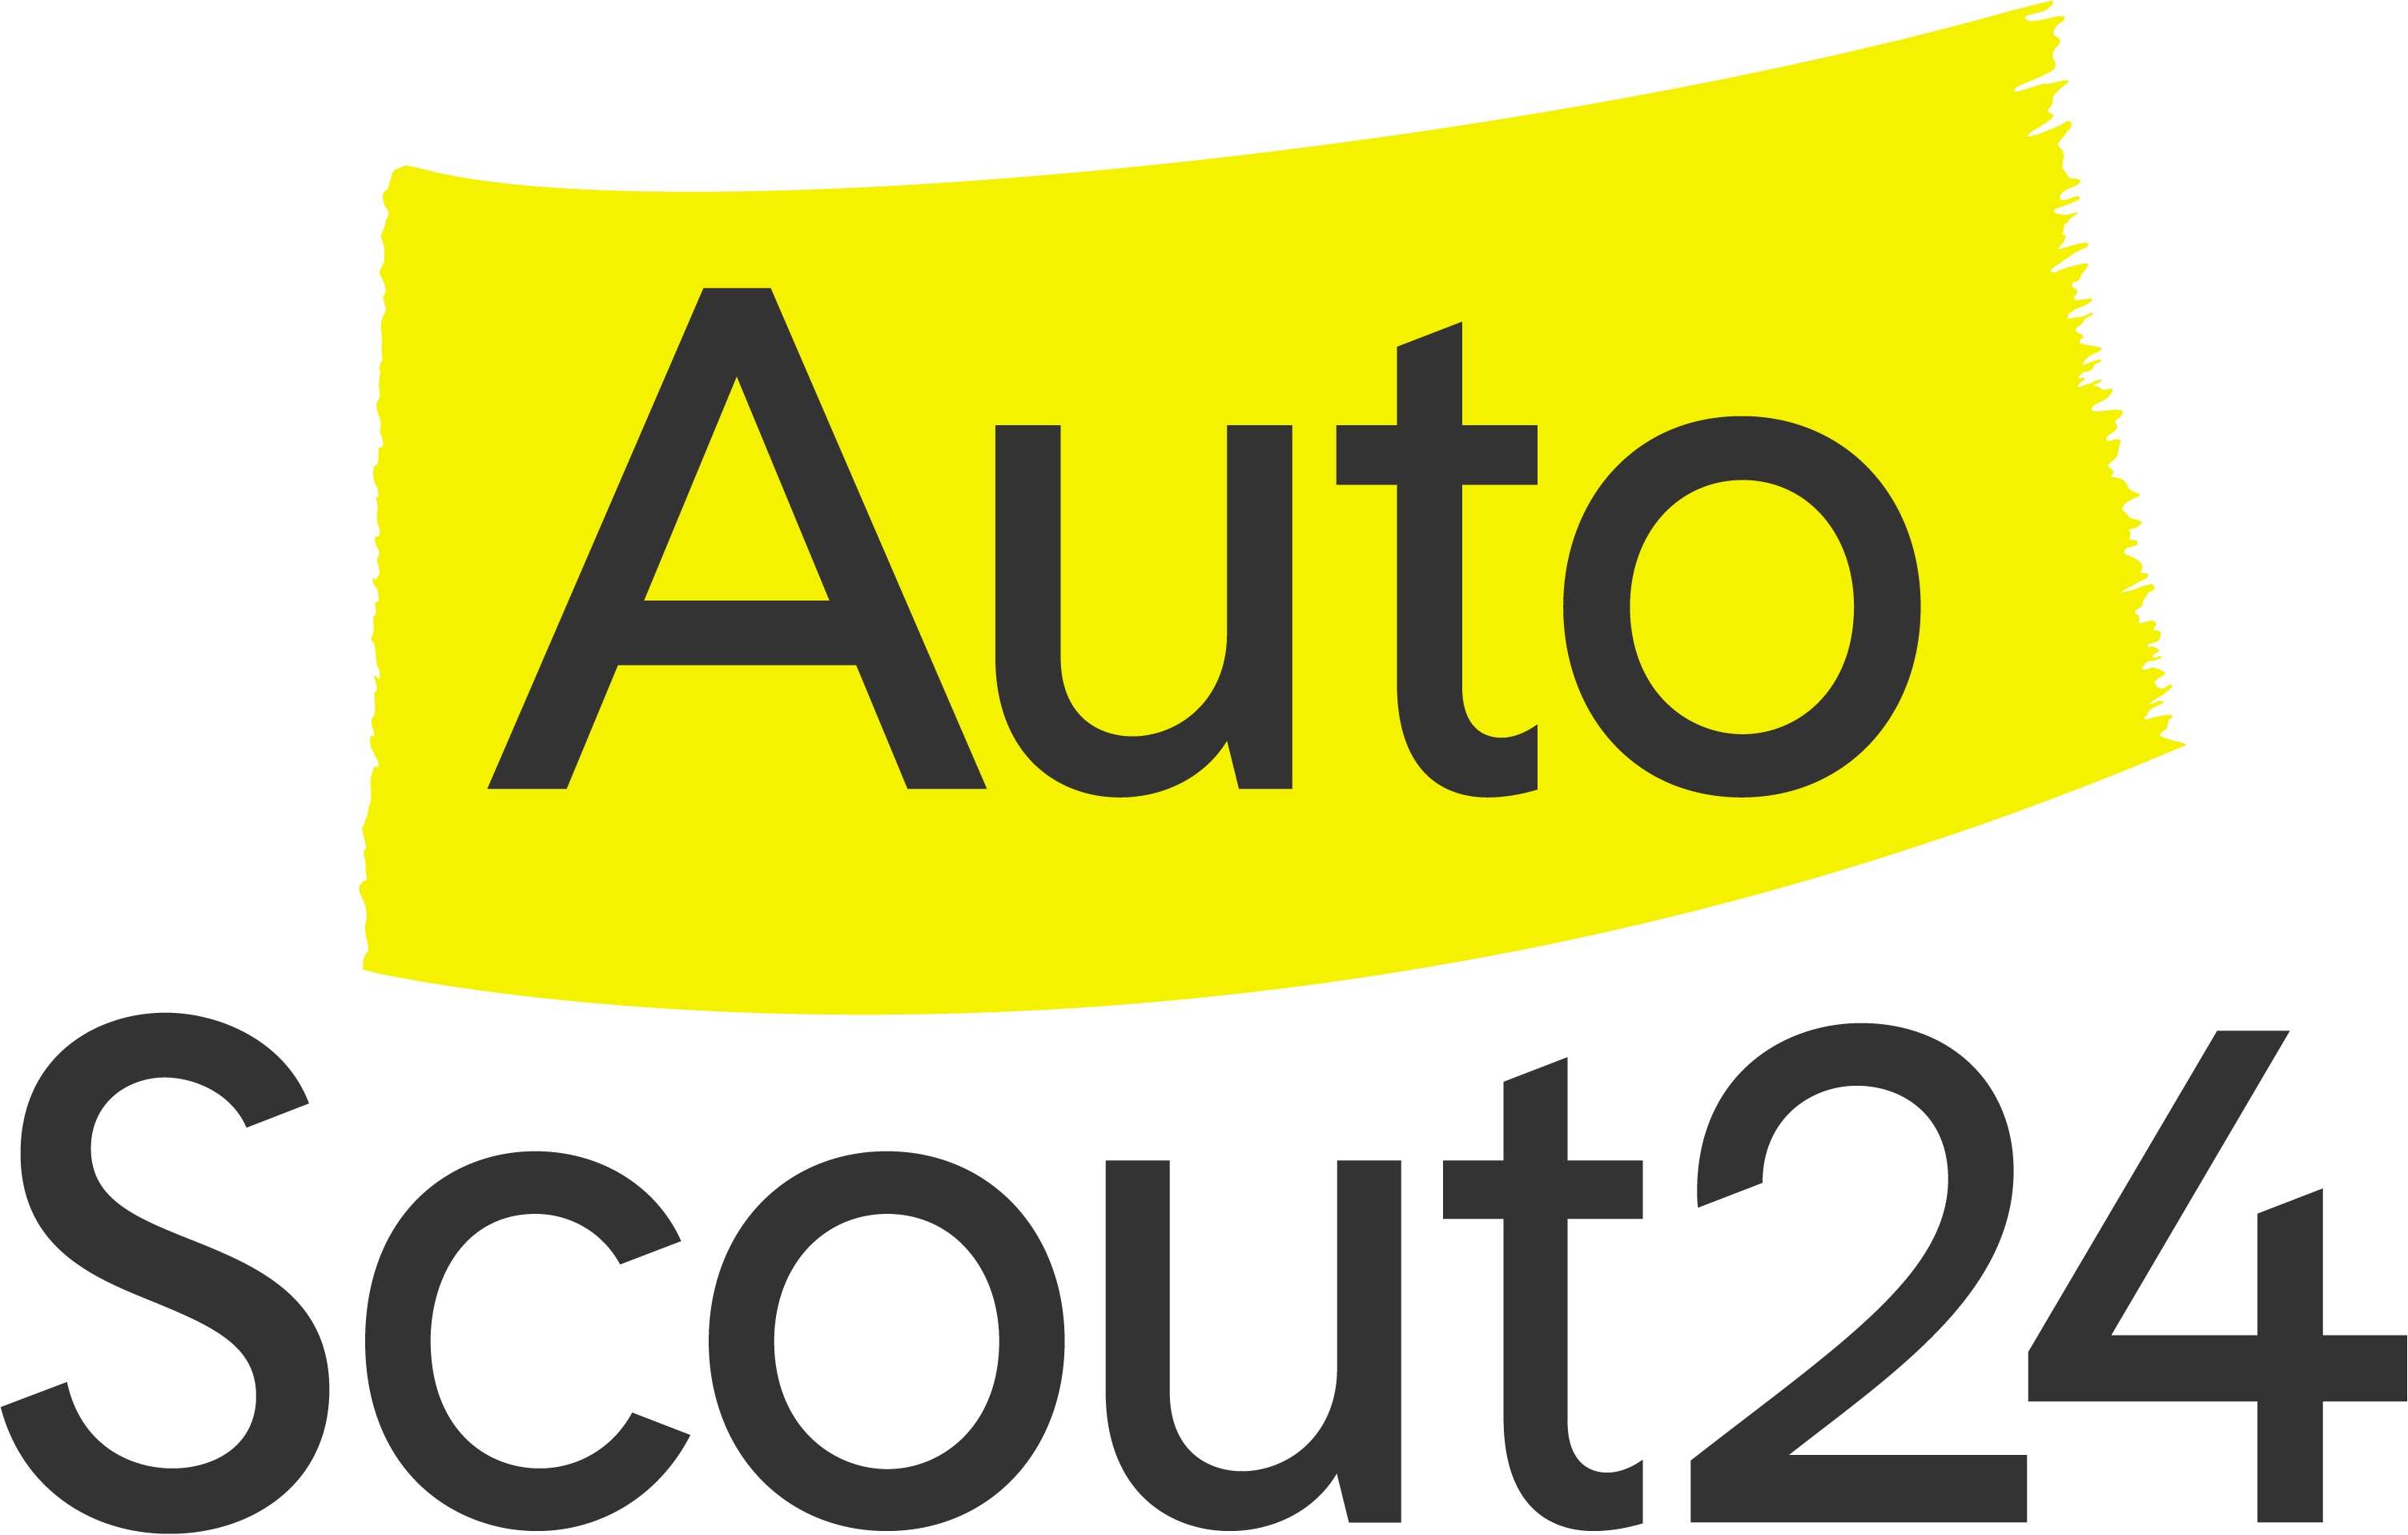 Autoscout24 officieel logo
